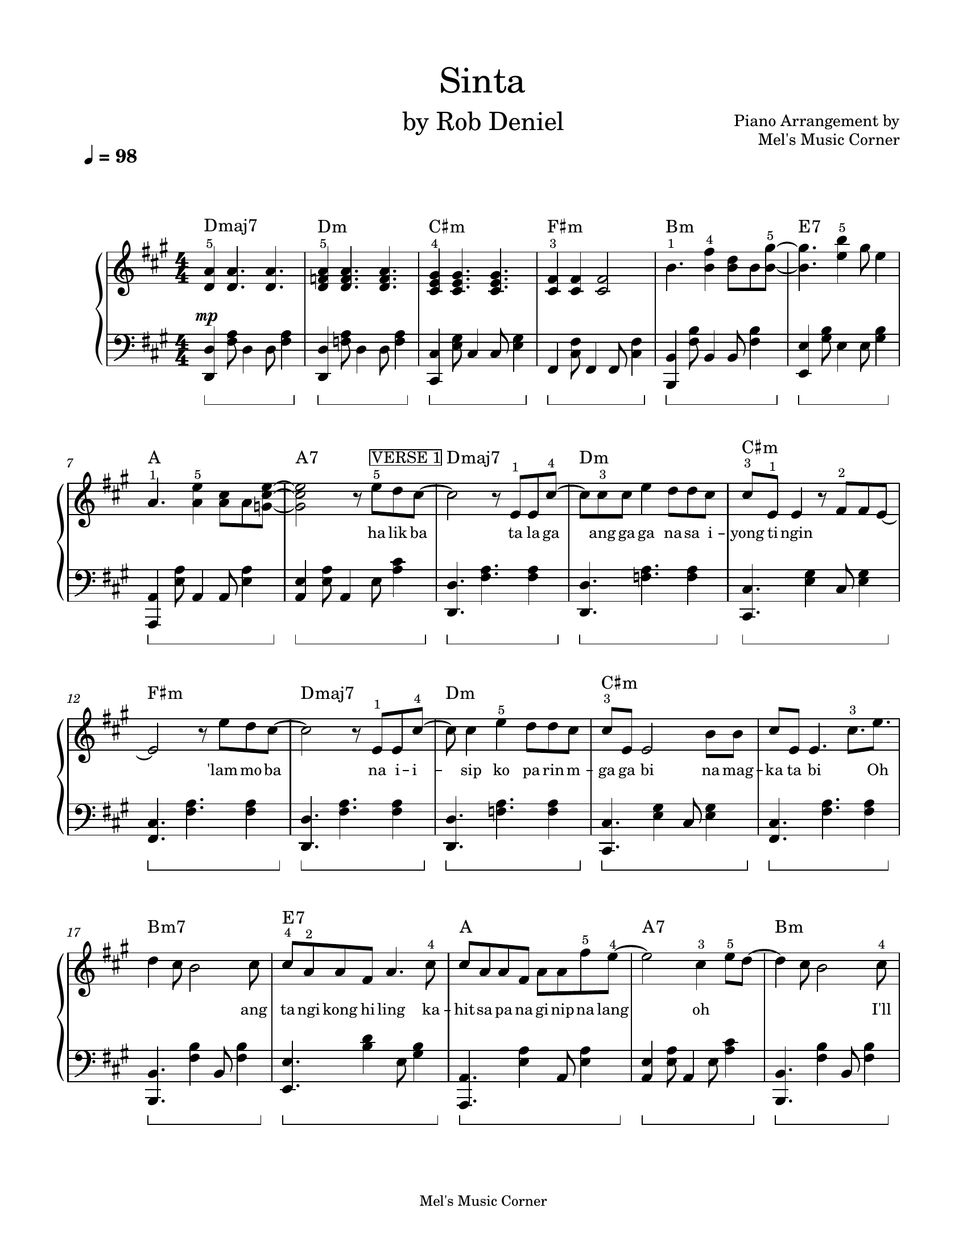 Rob Deniel - Sinta (piano sheet music) by Mel's Music Corner